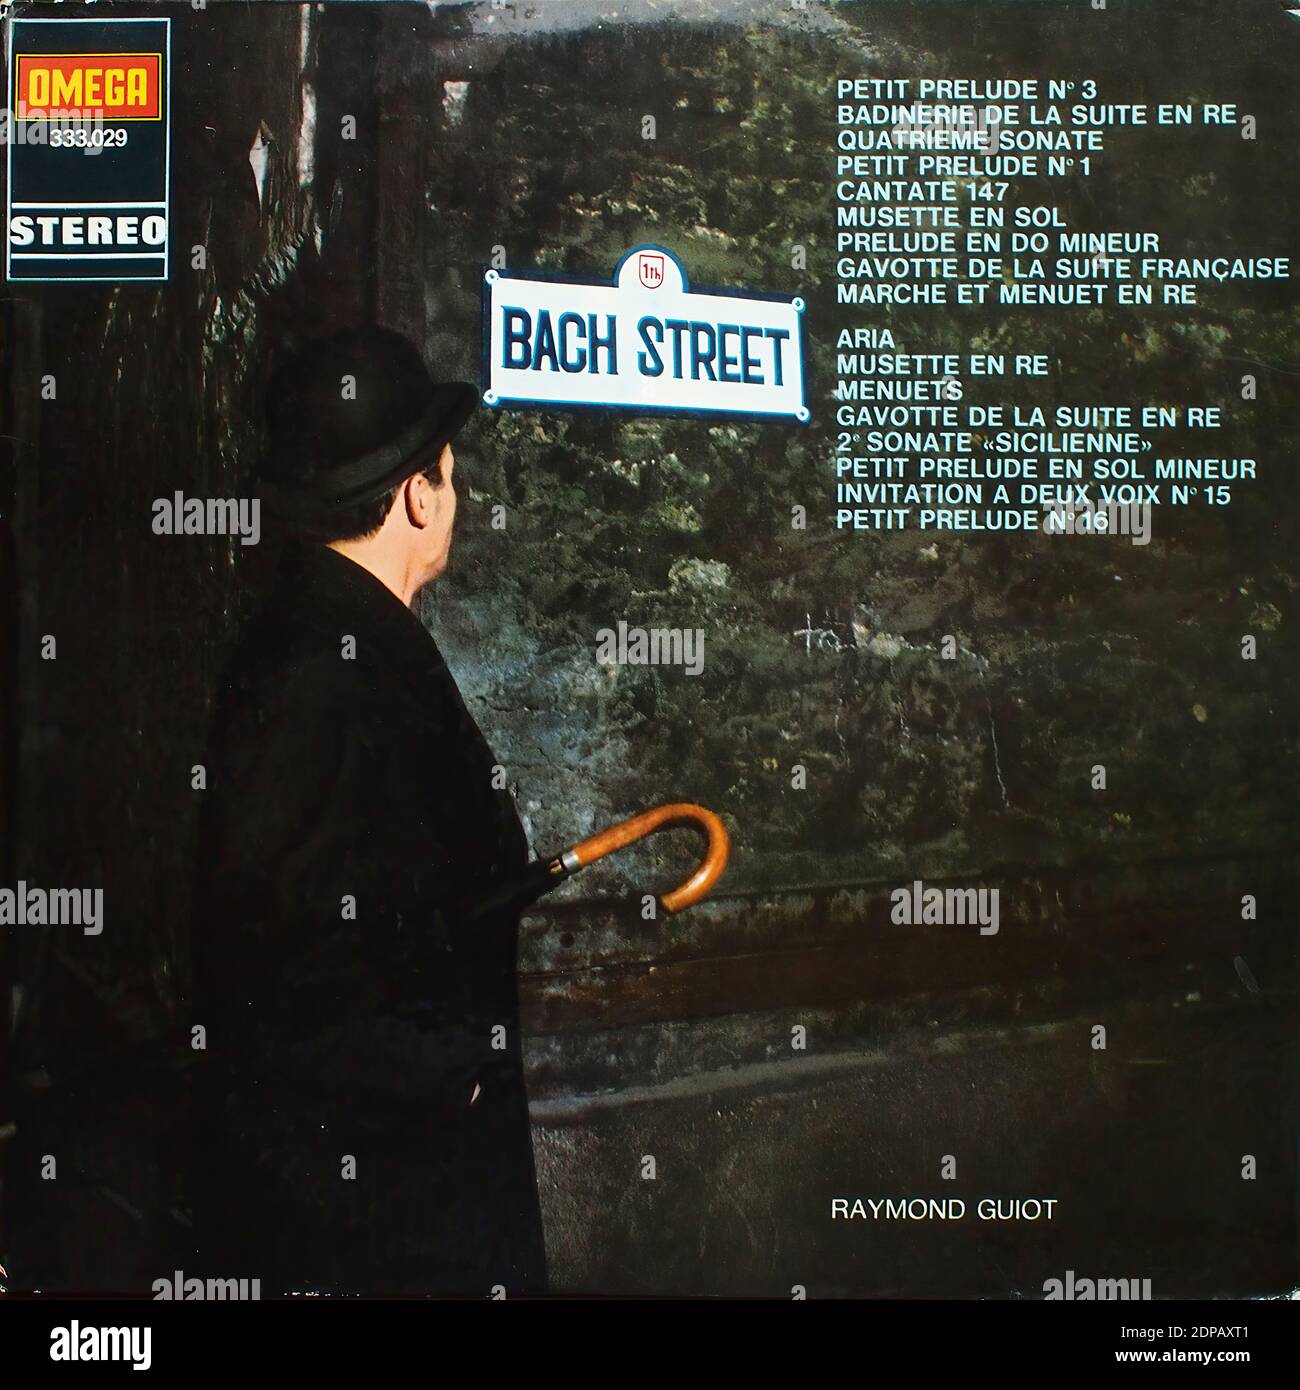 Bach Street - Raymond Guiot Flöte, Guy Pedersen Bass, Michel Hausser Vibraphon, Daniel Humair Drums, Omega 333.029 - Vintage Vinyl Album Cover Stockfoto